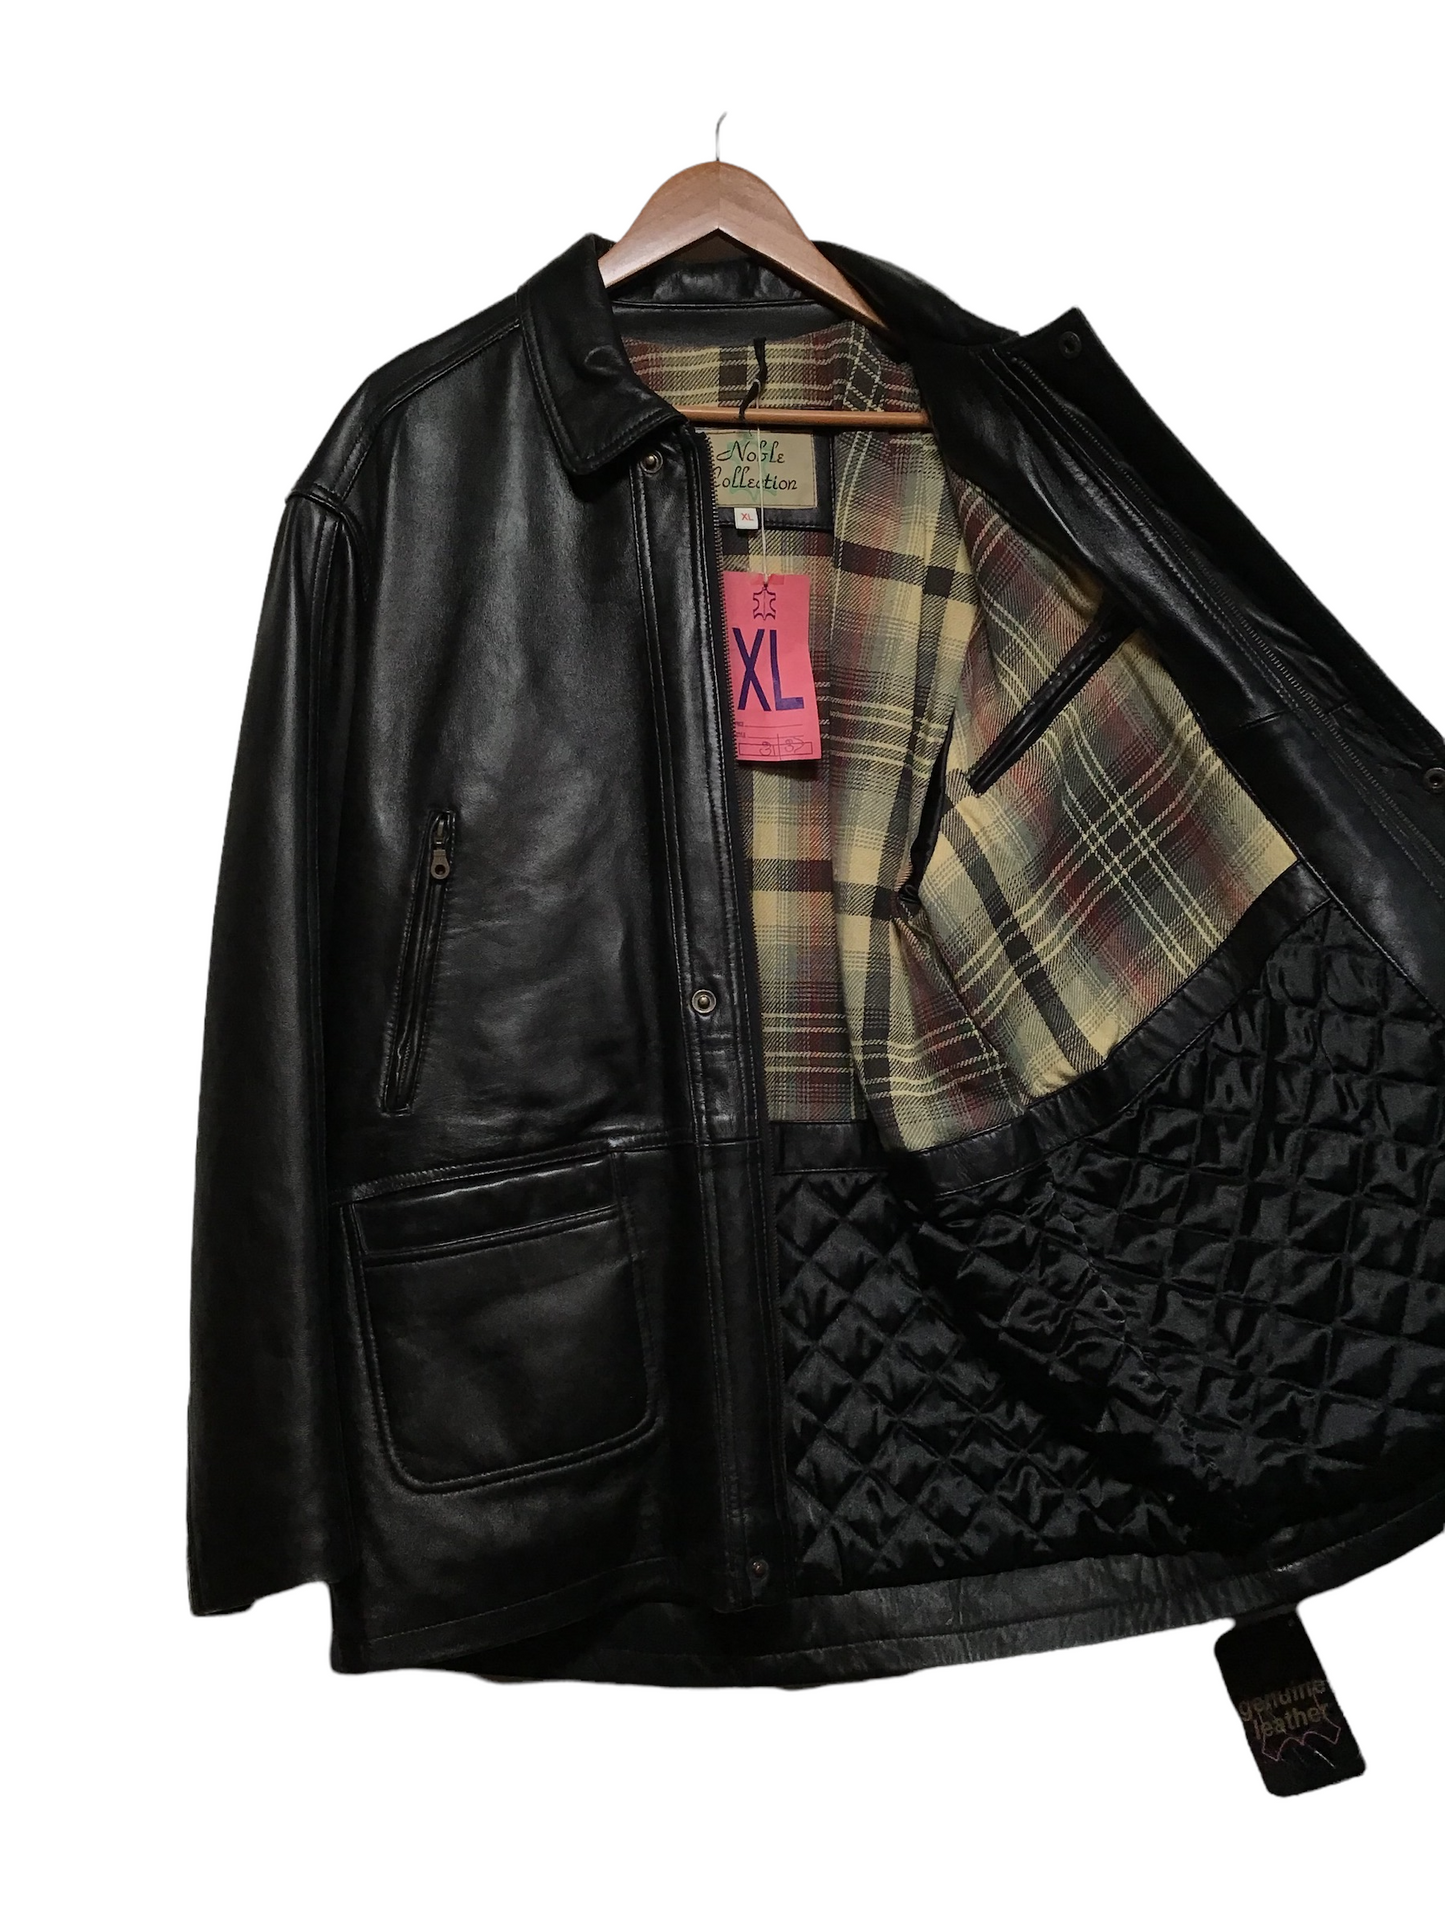 Black Leather Coat (Size XL)